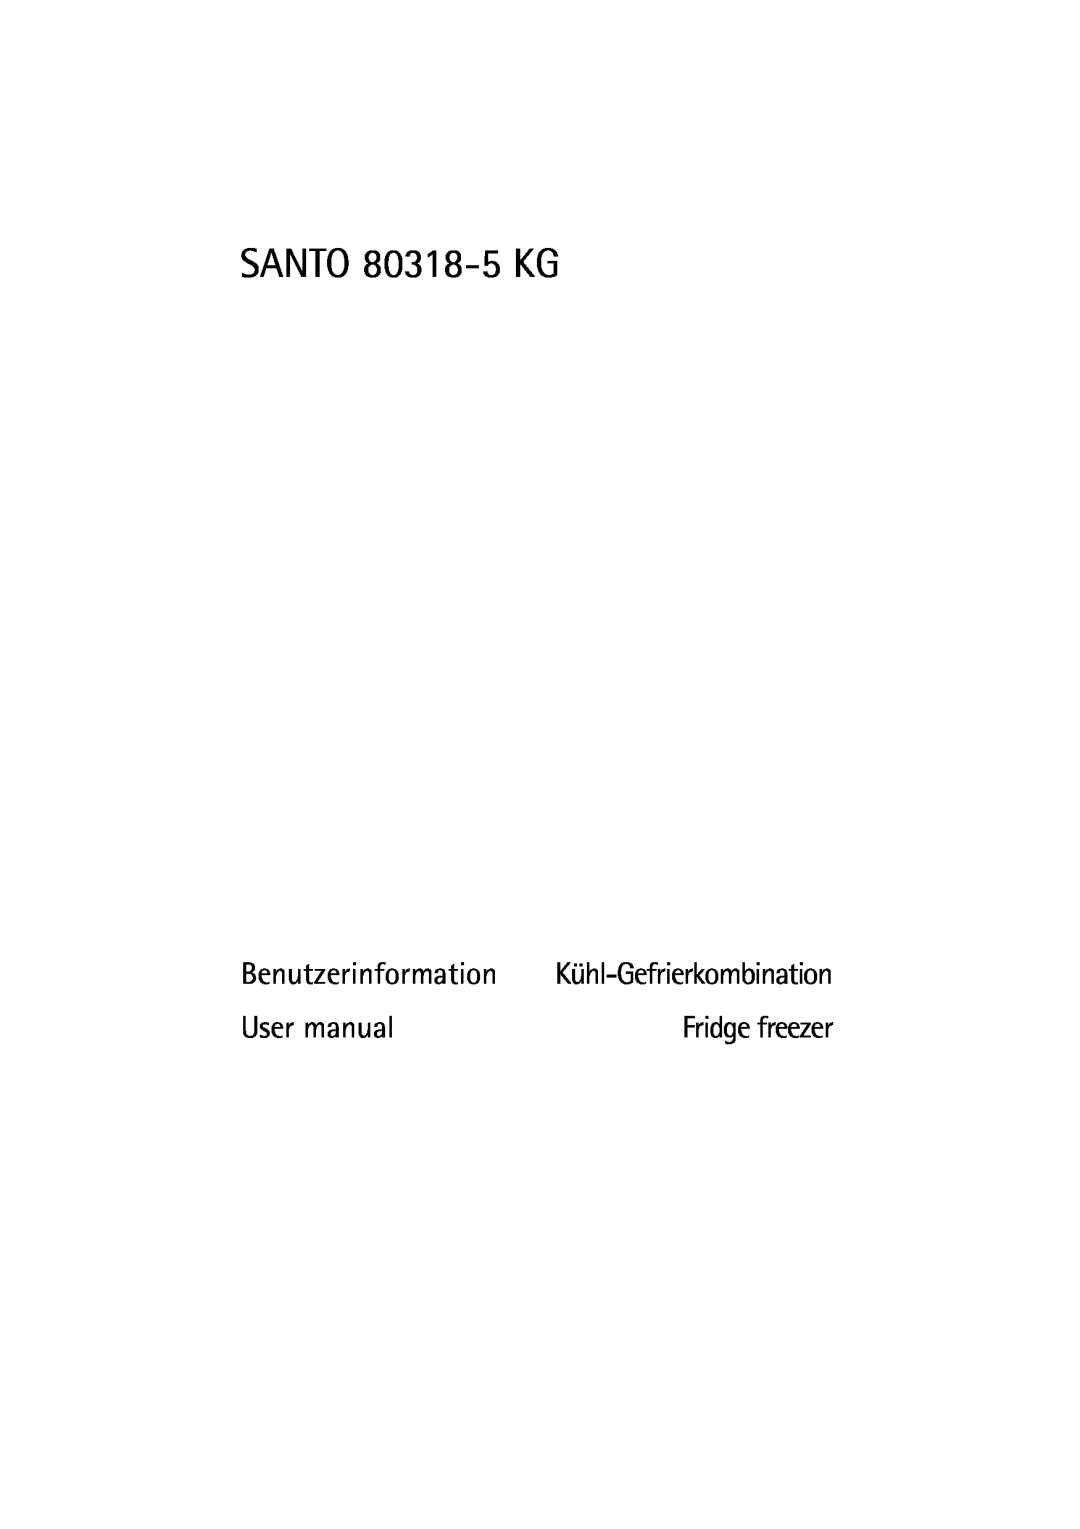 AEG user manual SANTO 80318-5 KG, Benutzerinformation Kühl-Gefrierkombination, Fridge freezer 